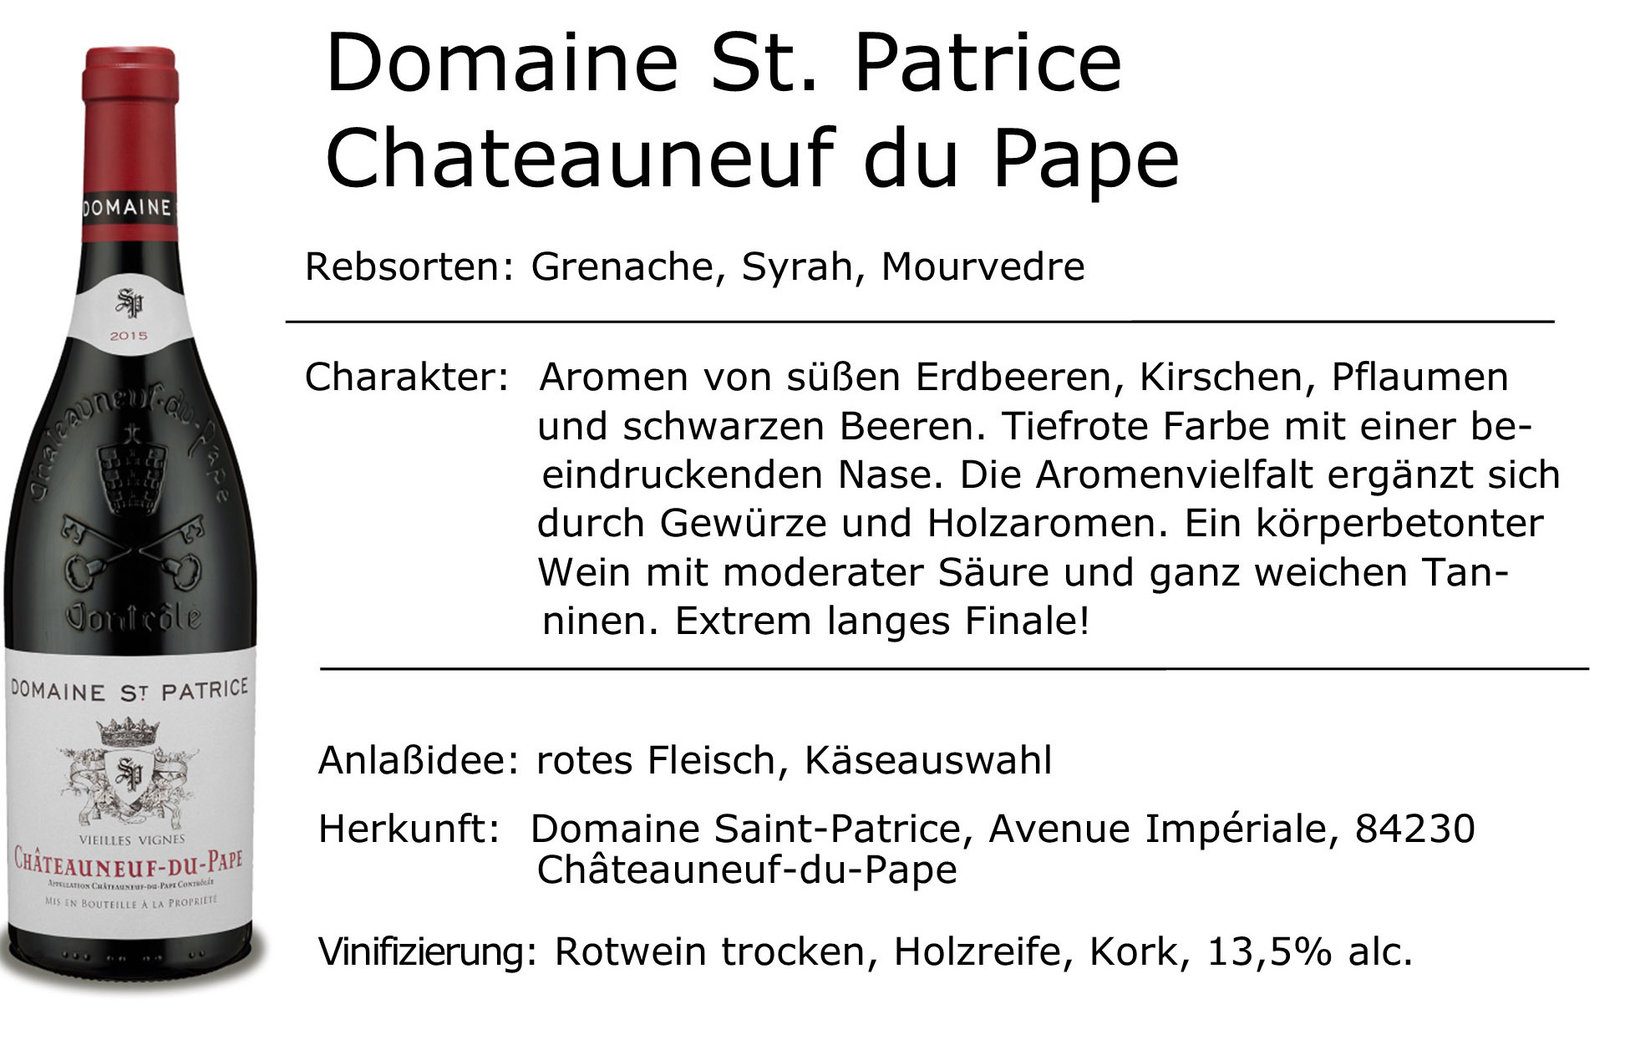 Domaine St. Patrice Chateauneuf du Pape 2015